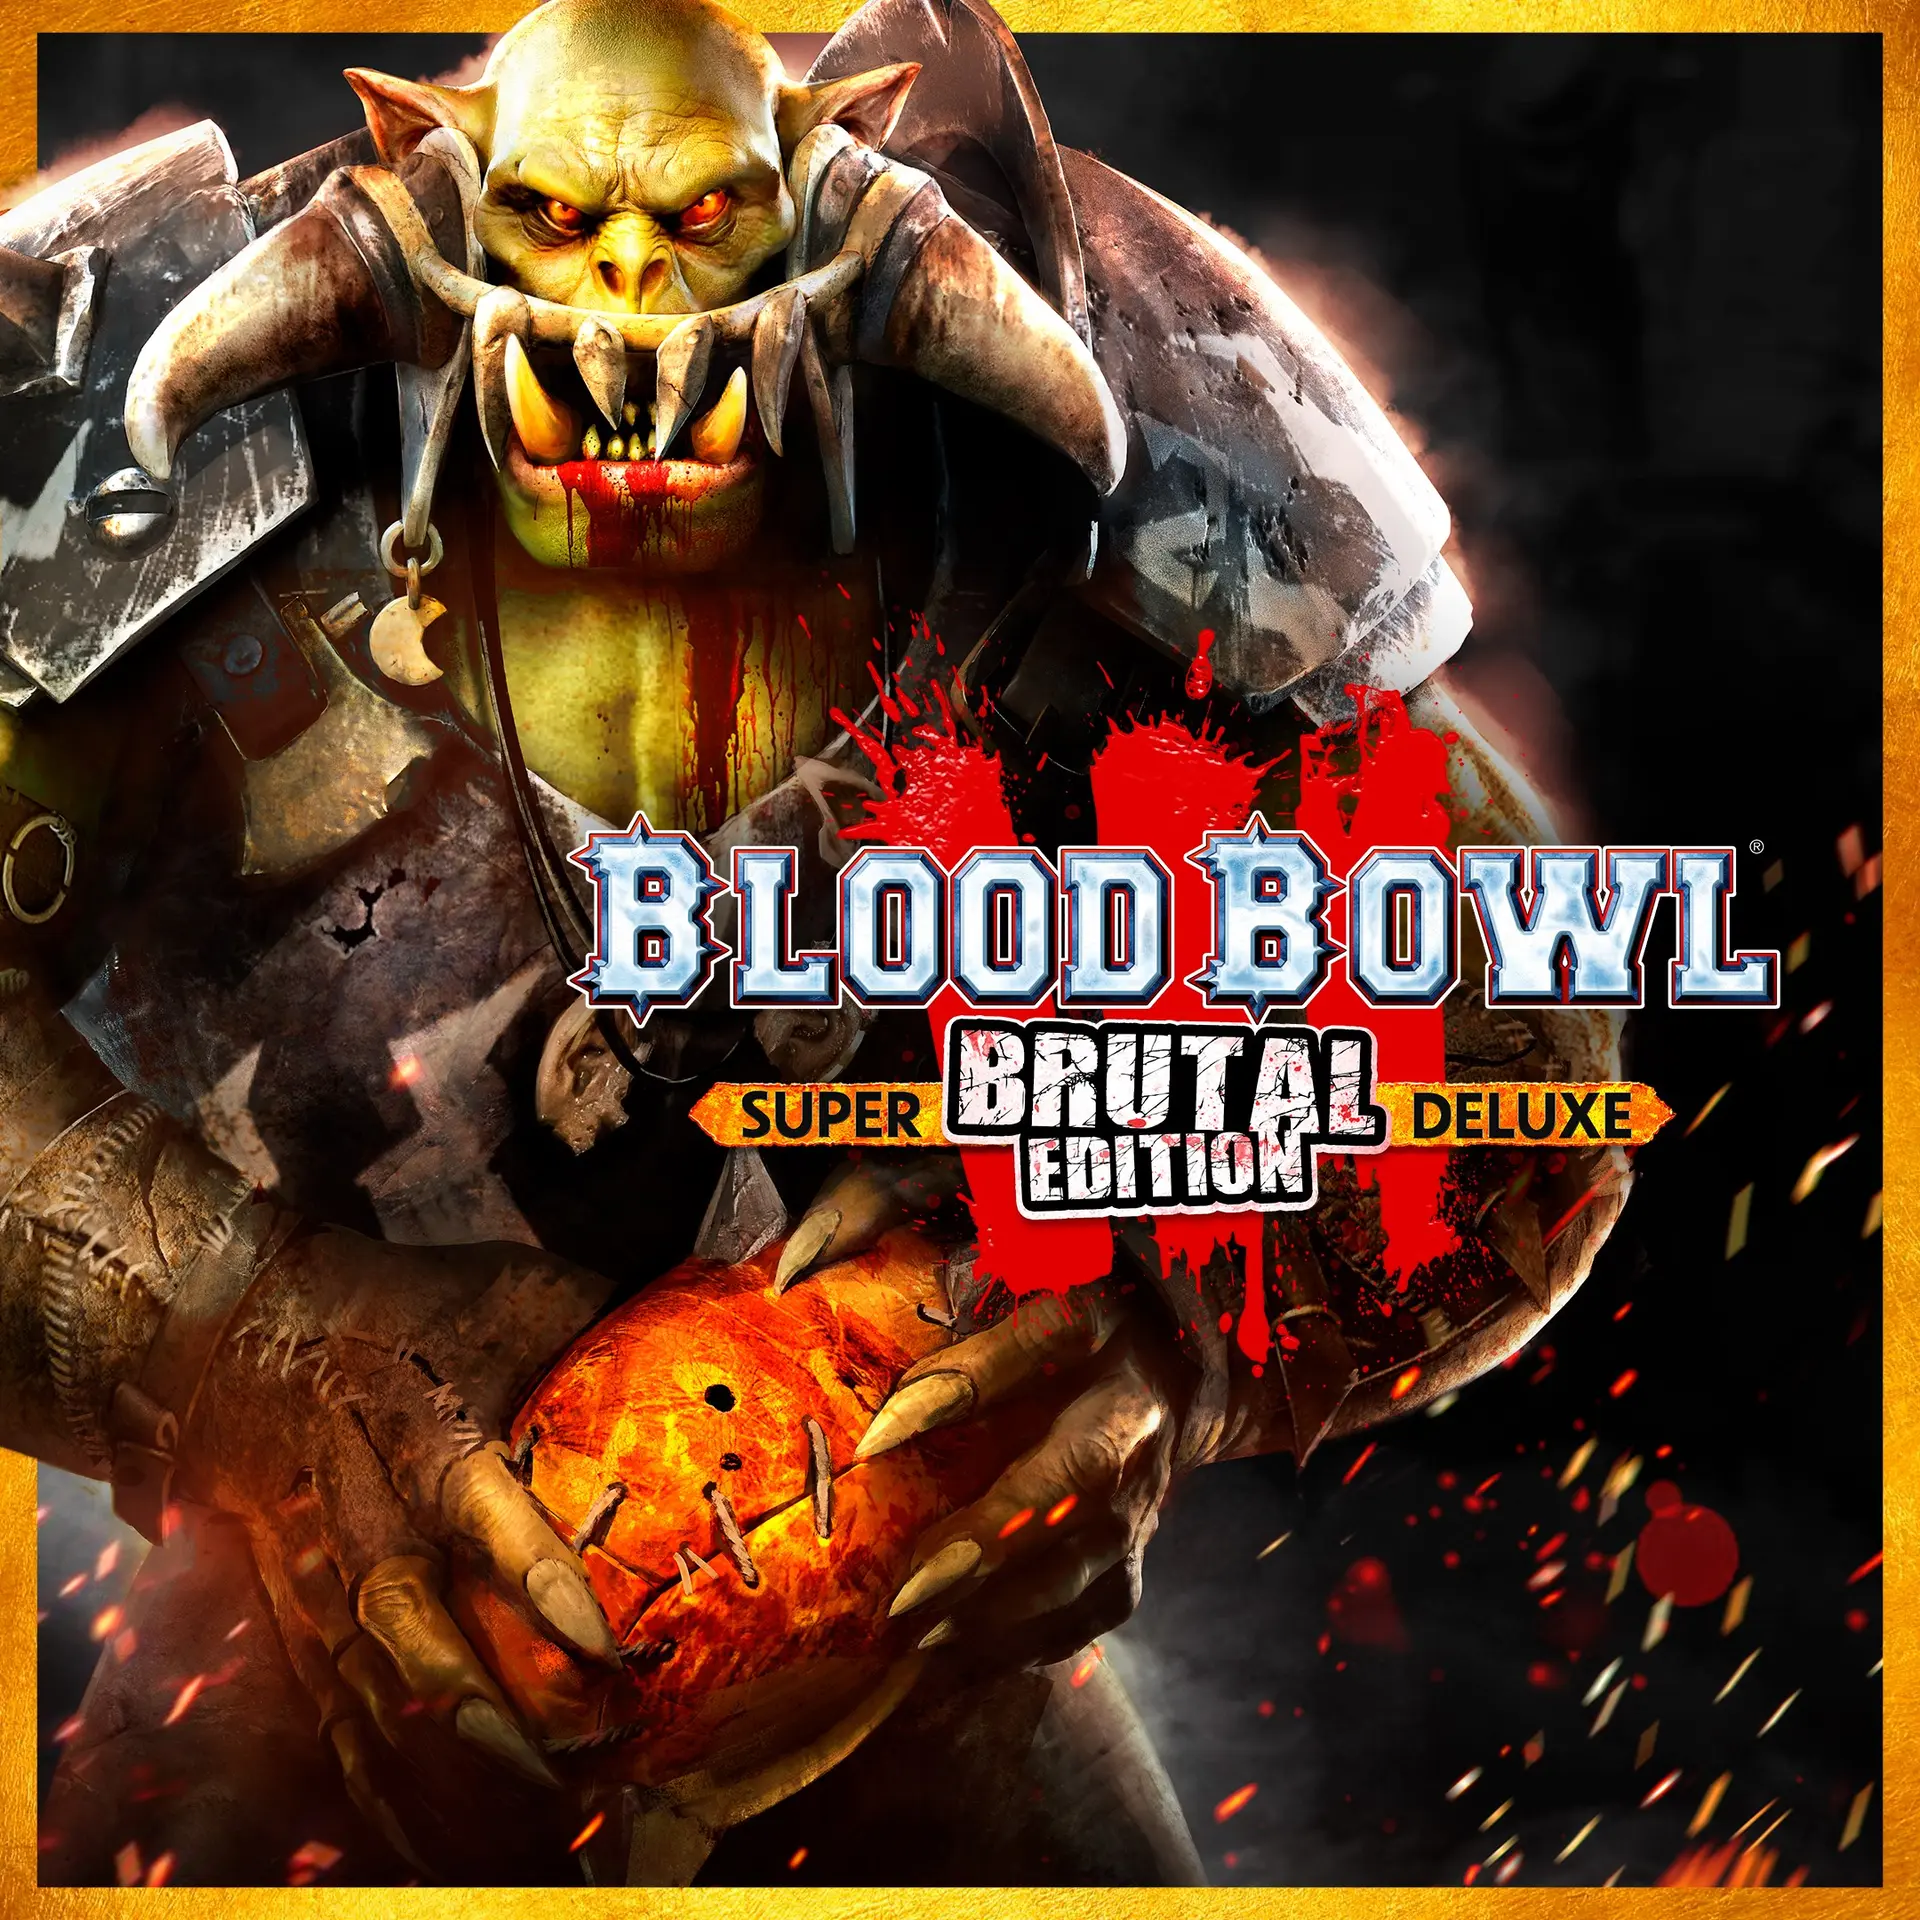 Blood Bowl 3 - Brutal Edition (Xbox Games BR)